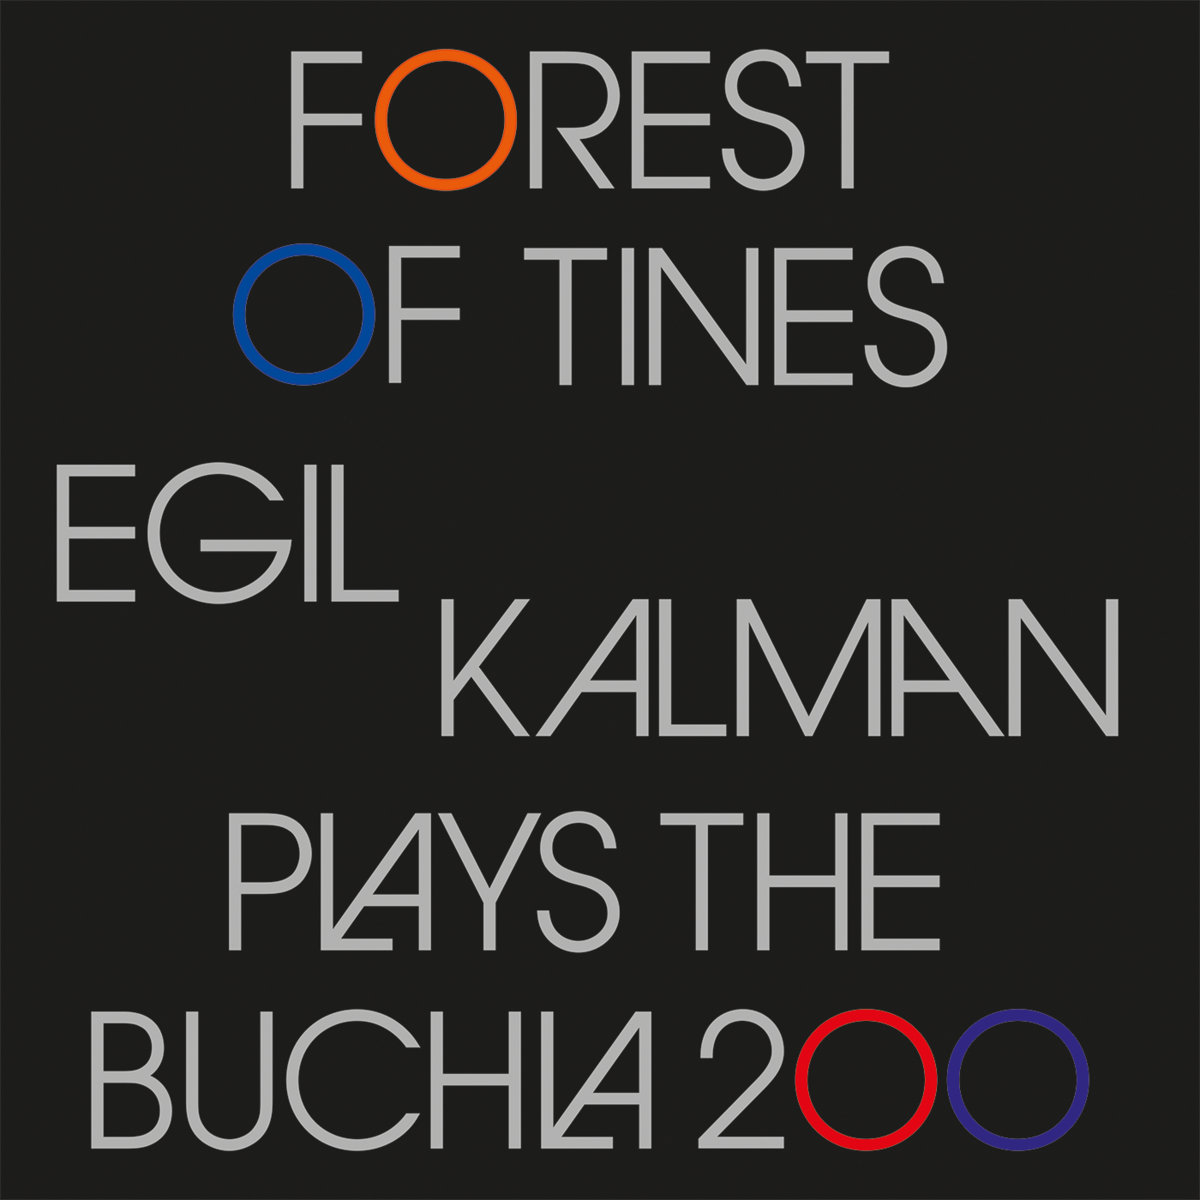 Forest of Tines (Egil Kalman plays the Buchla 200)